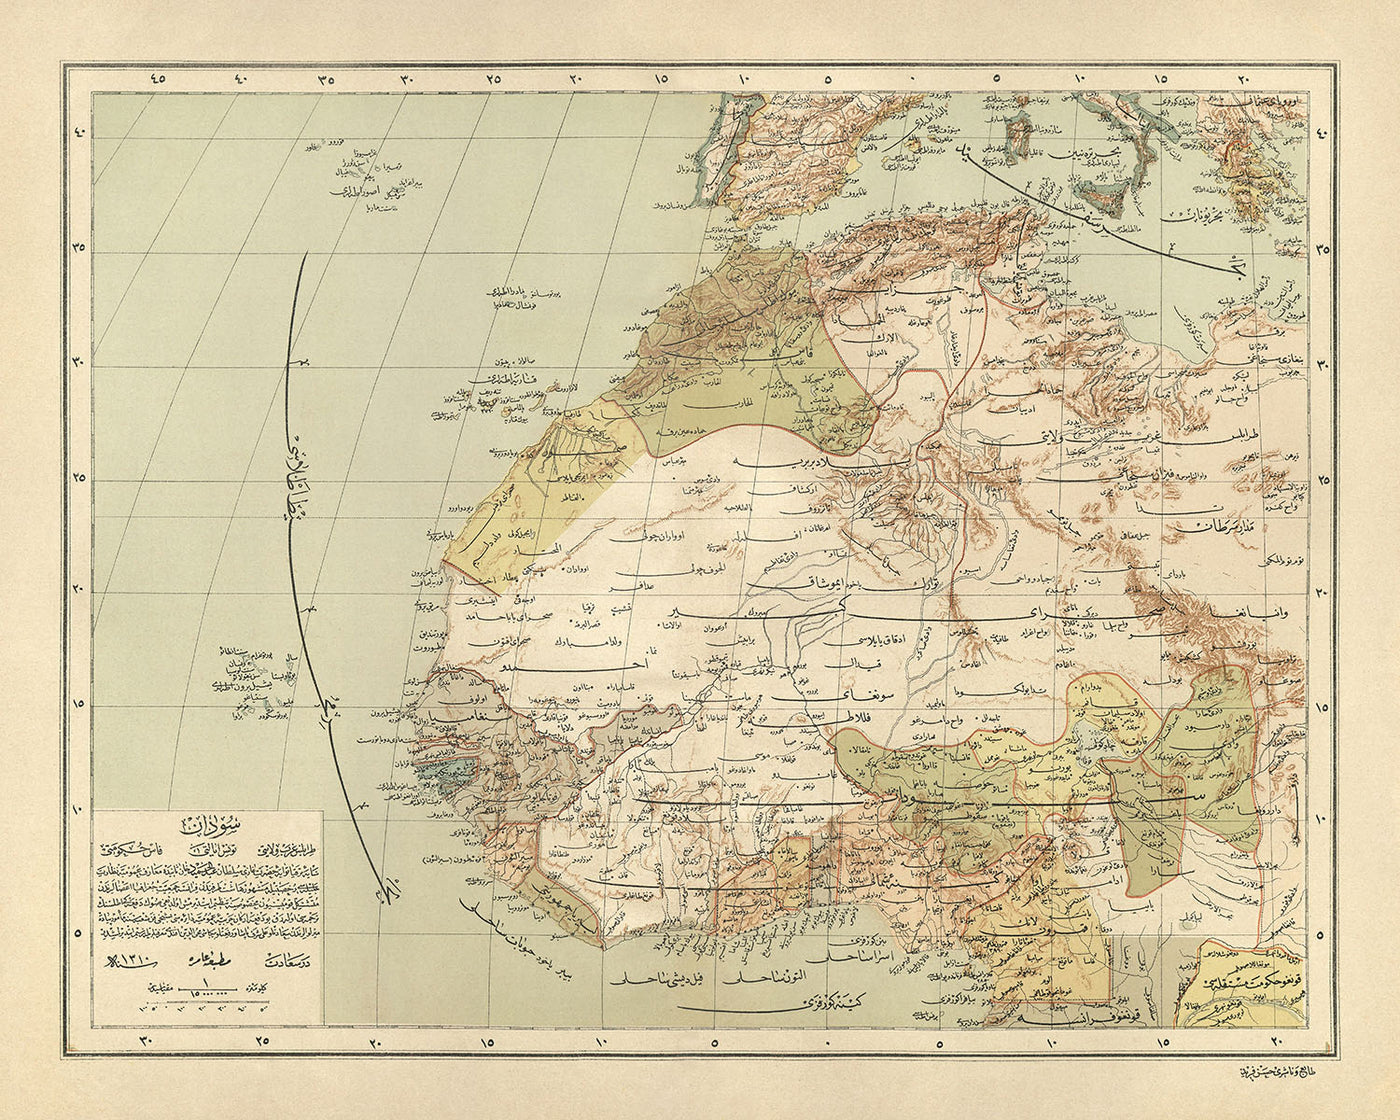 Old Arabic Map of Northwest Africa by Esref, 1894: Marrakesh, Algiers, Tunis, Tripoli, Sahara